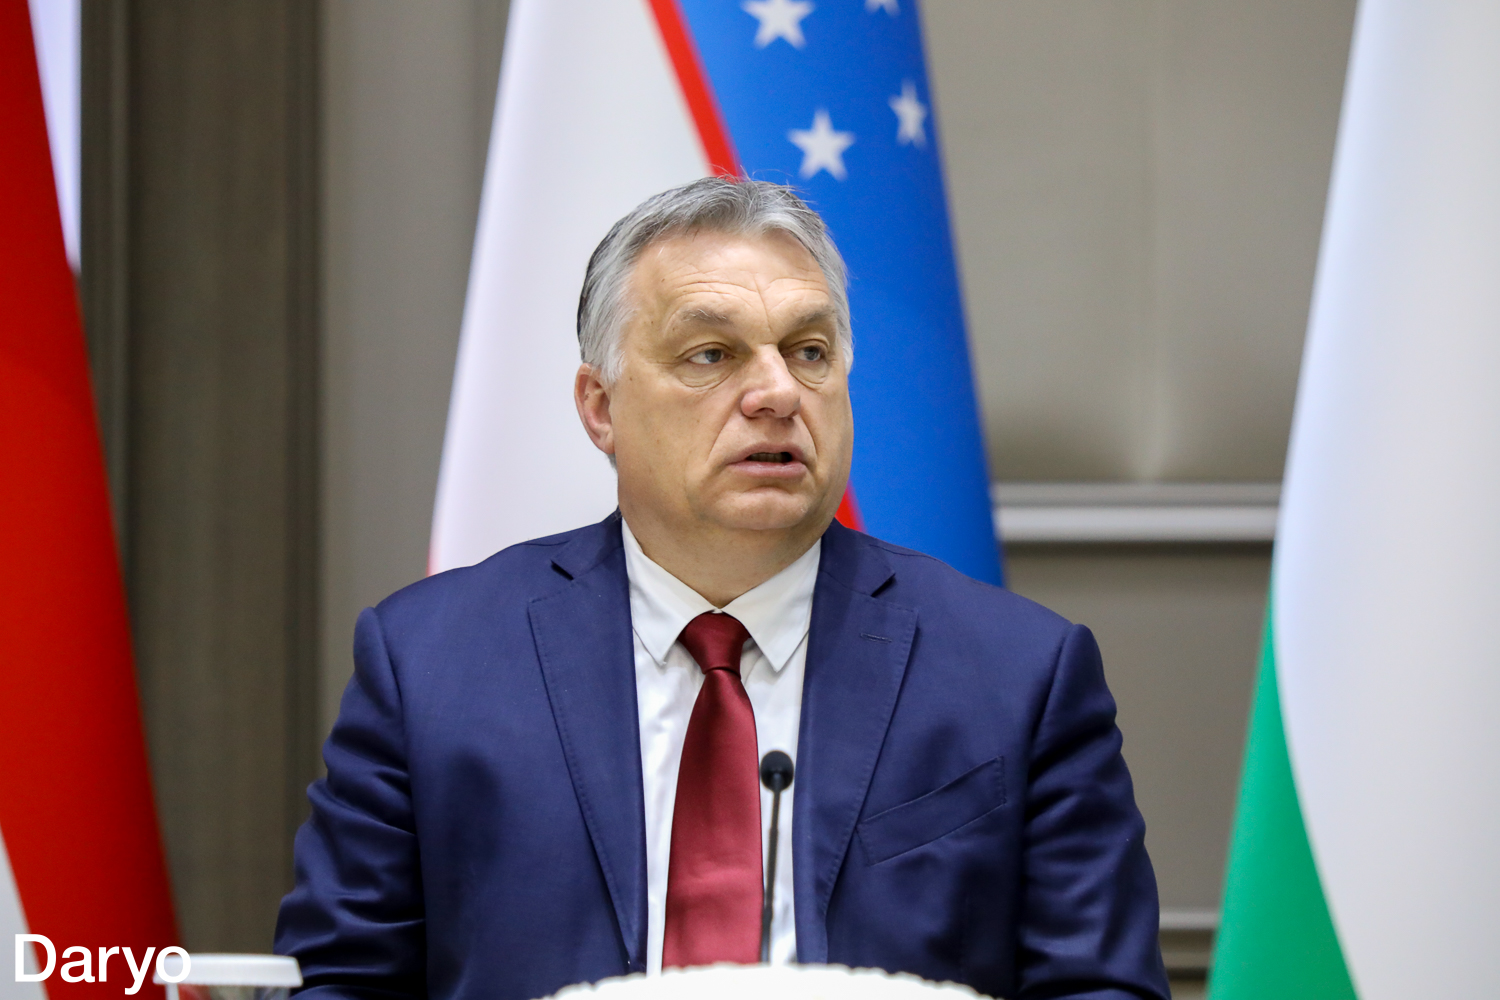 Венгрия бош вазири Виктор Орбан.